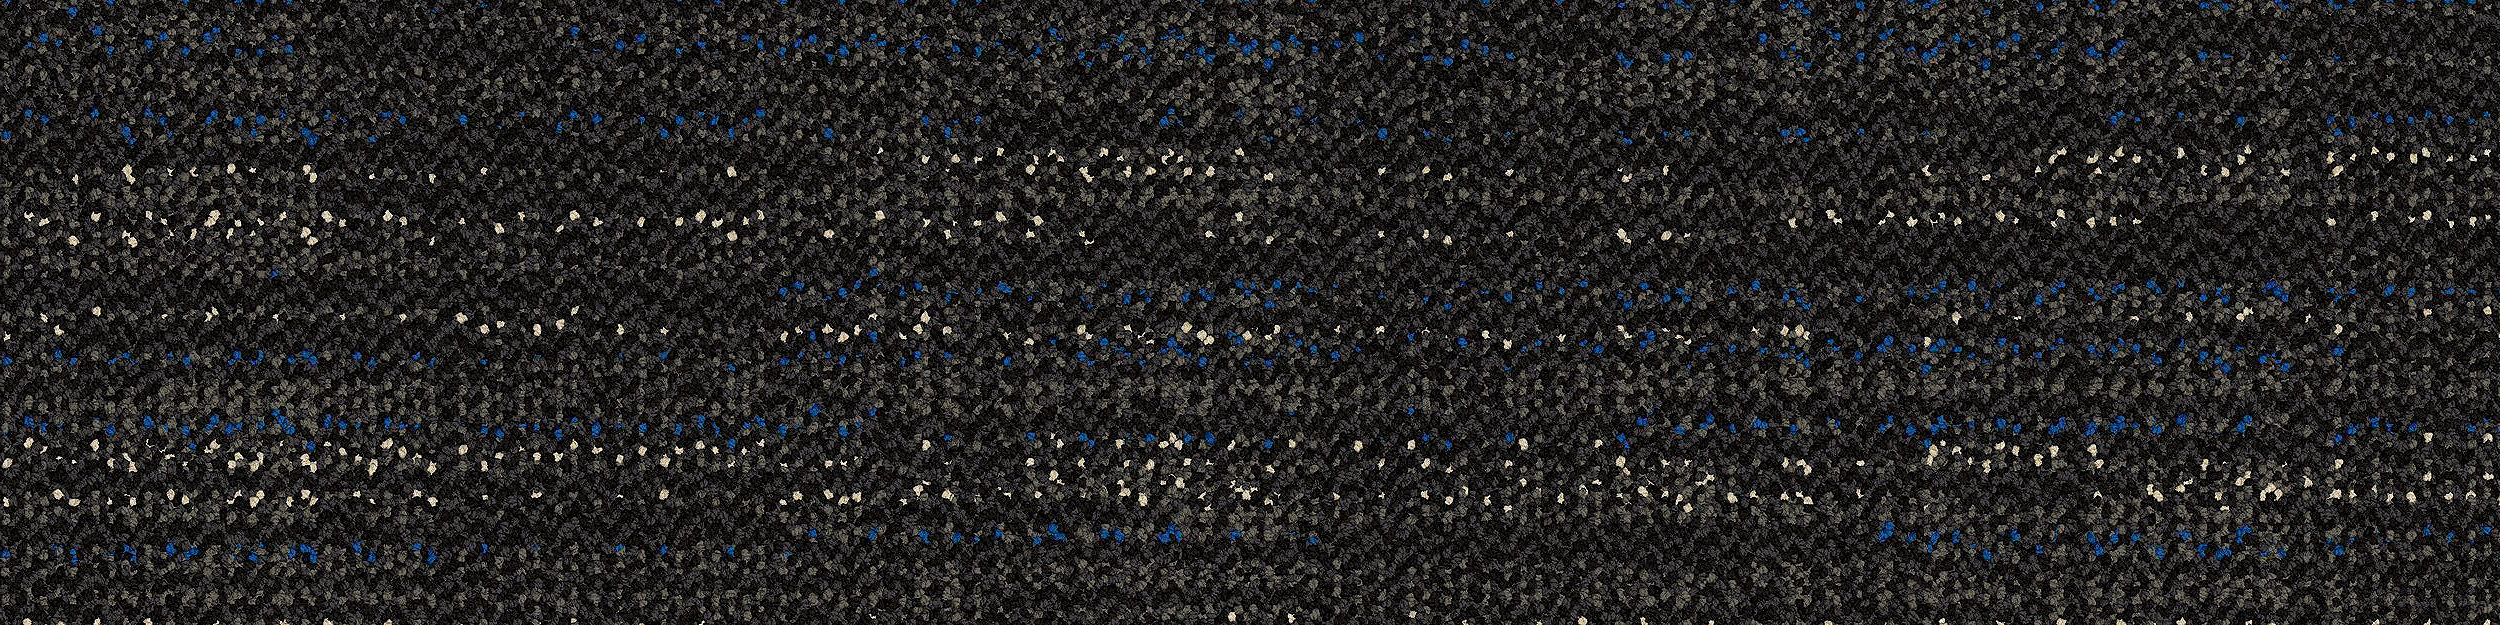 Bitrate Carpet Tile In Dark Blue numéro d’image 7